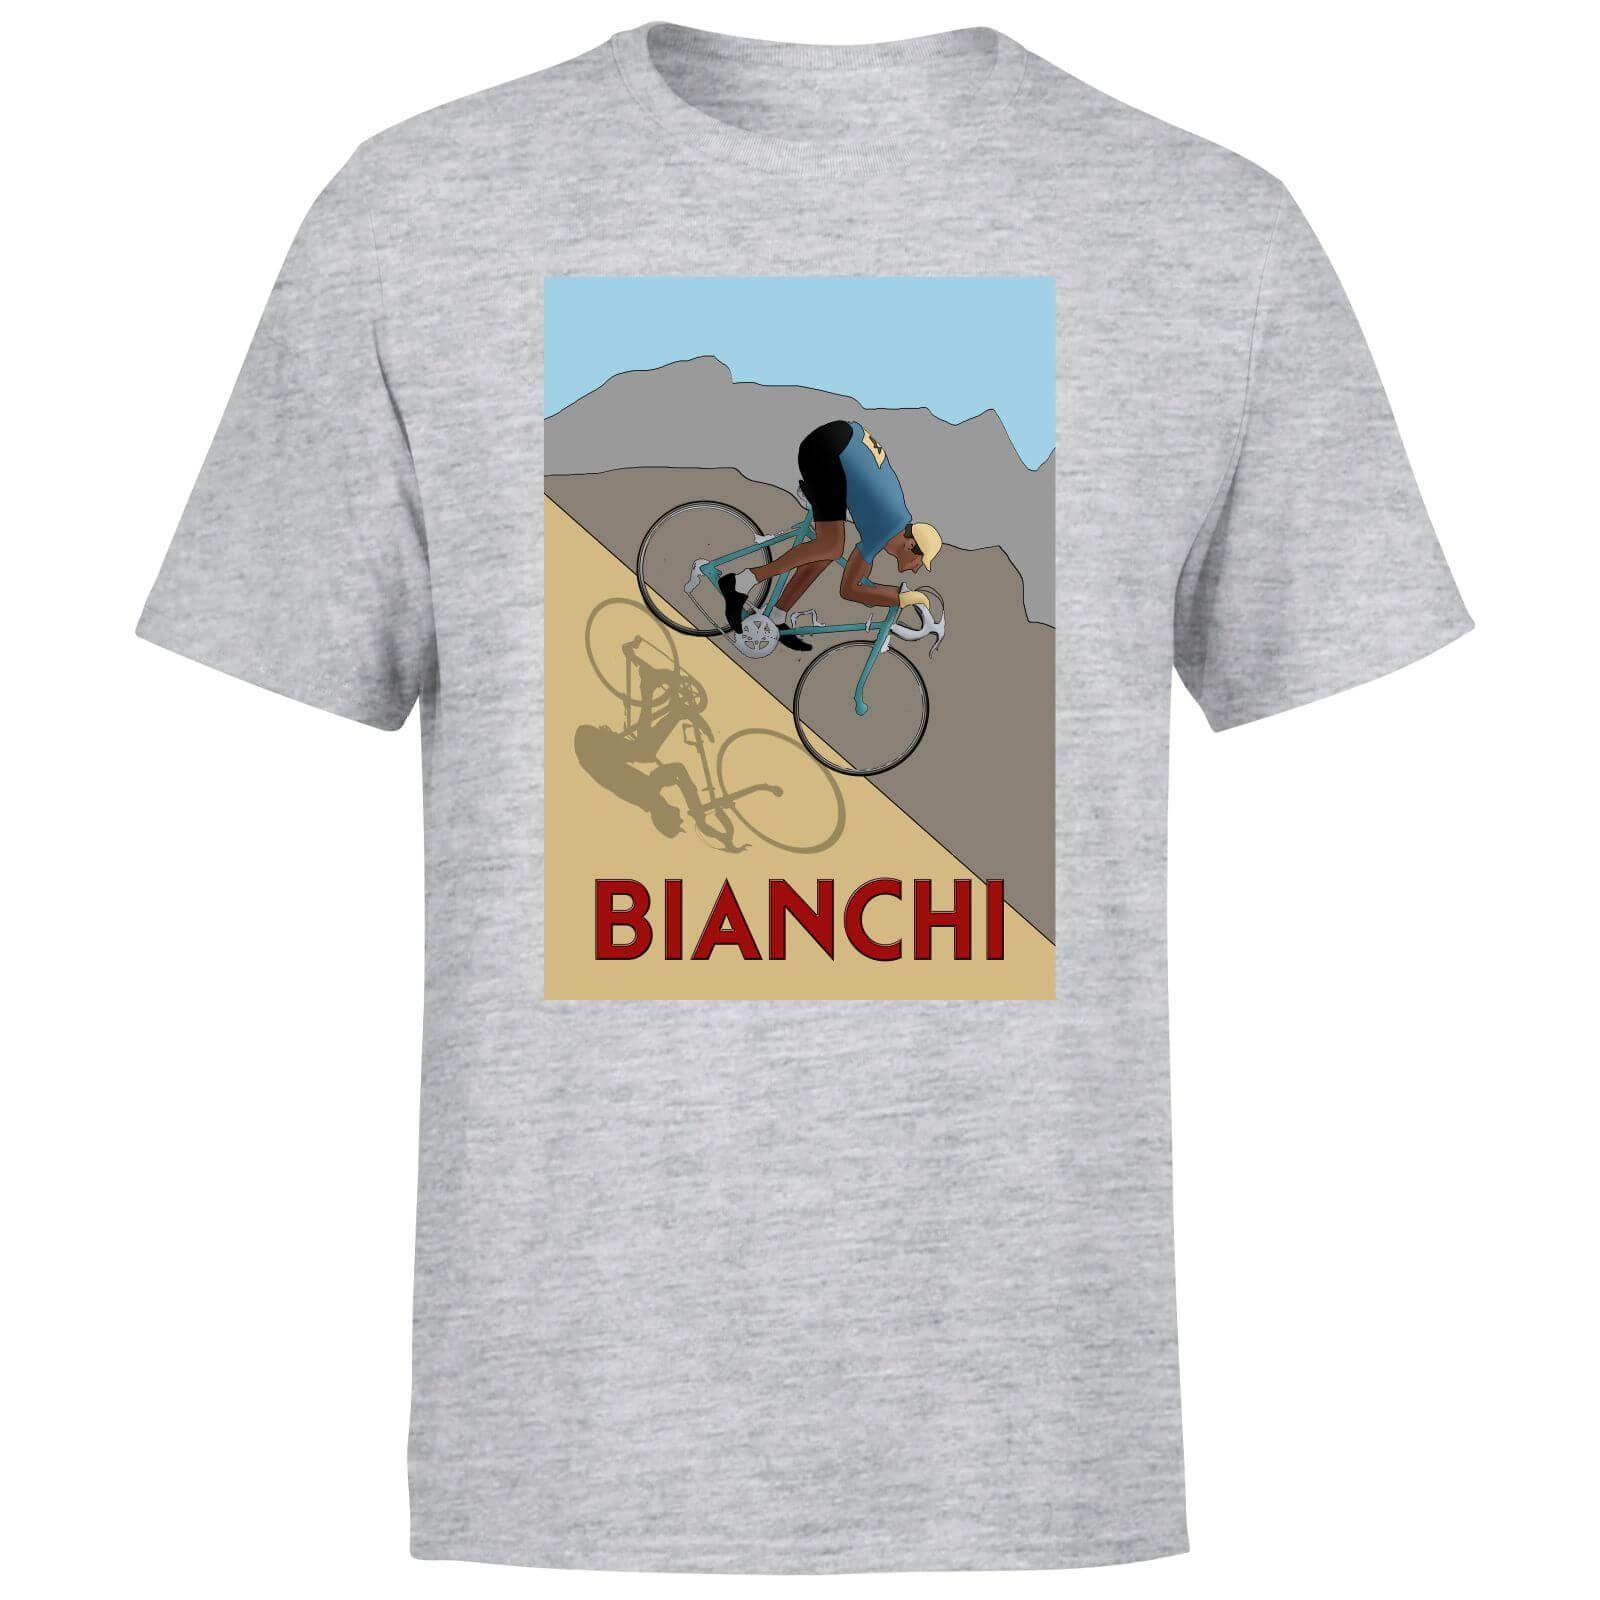 Bianchi Men's T-Shirt - Grey - S - Grey